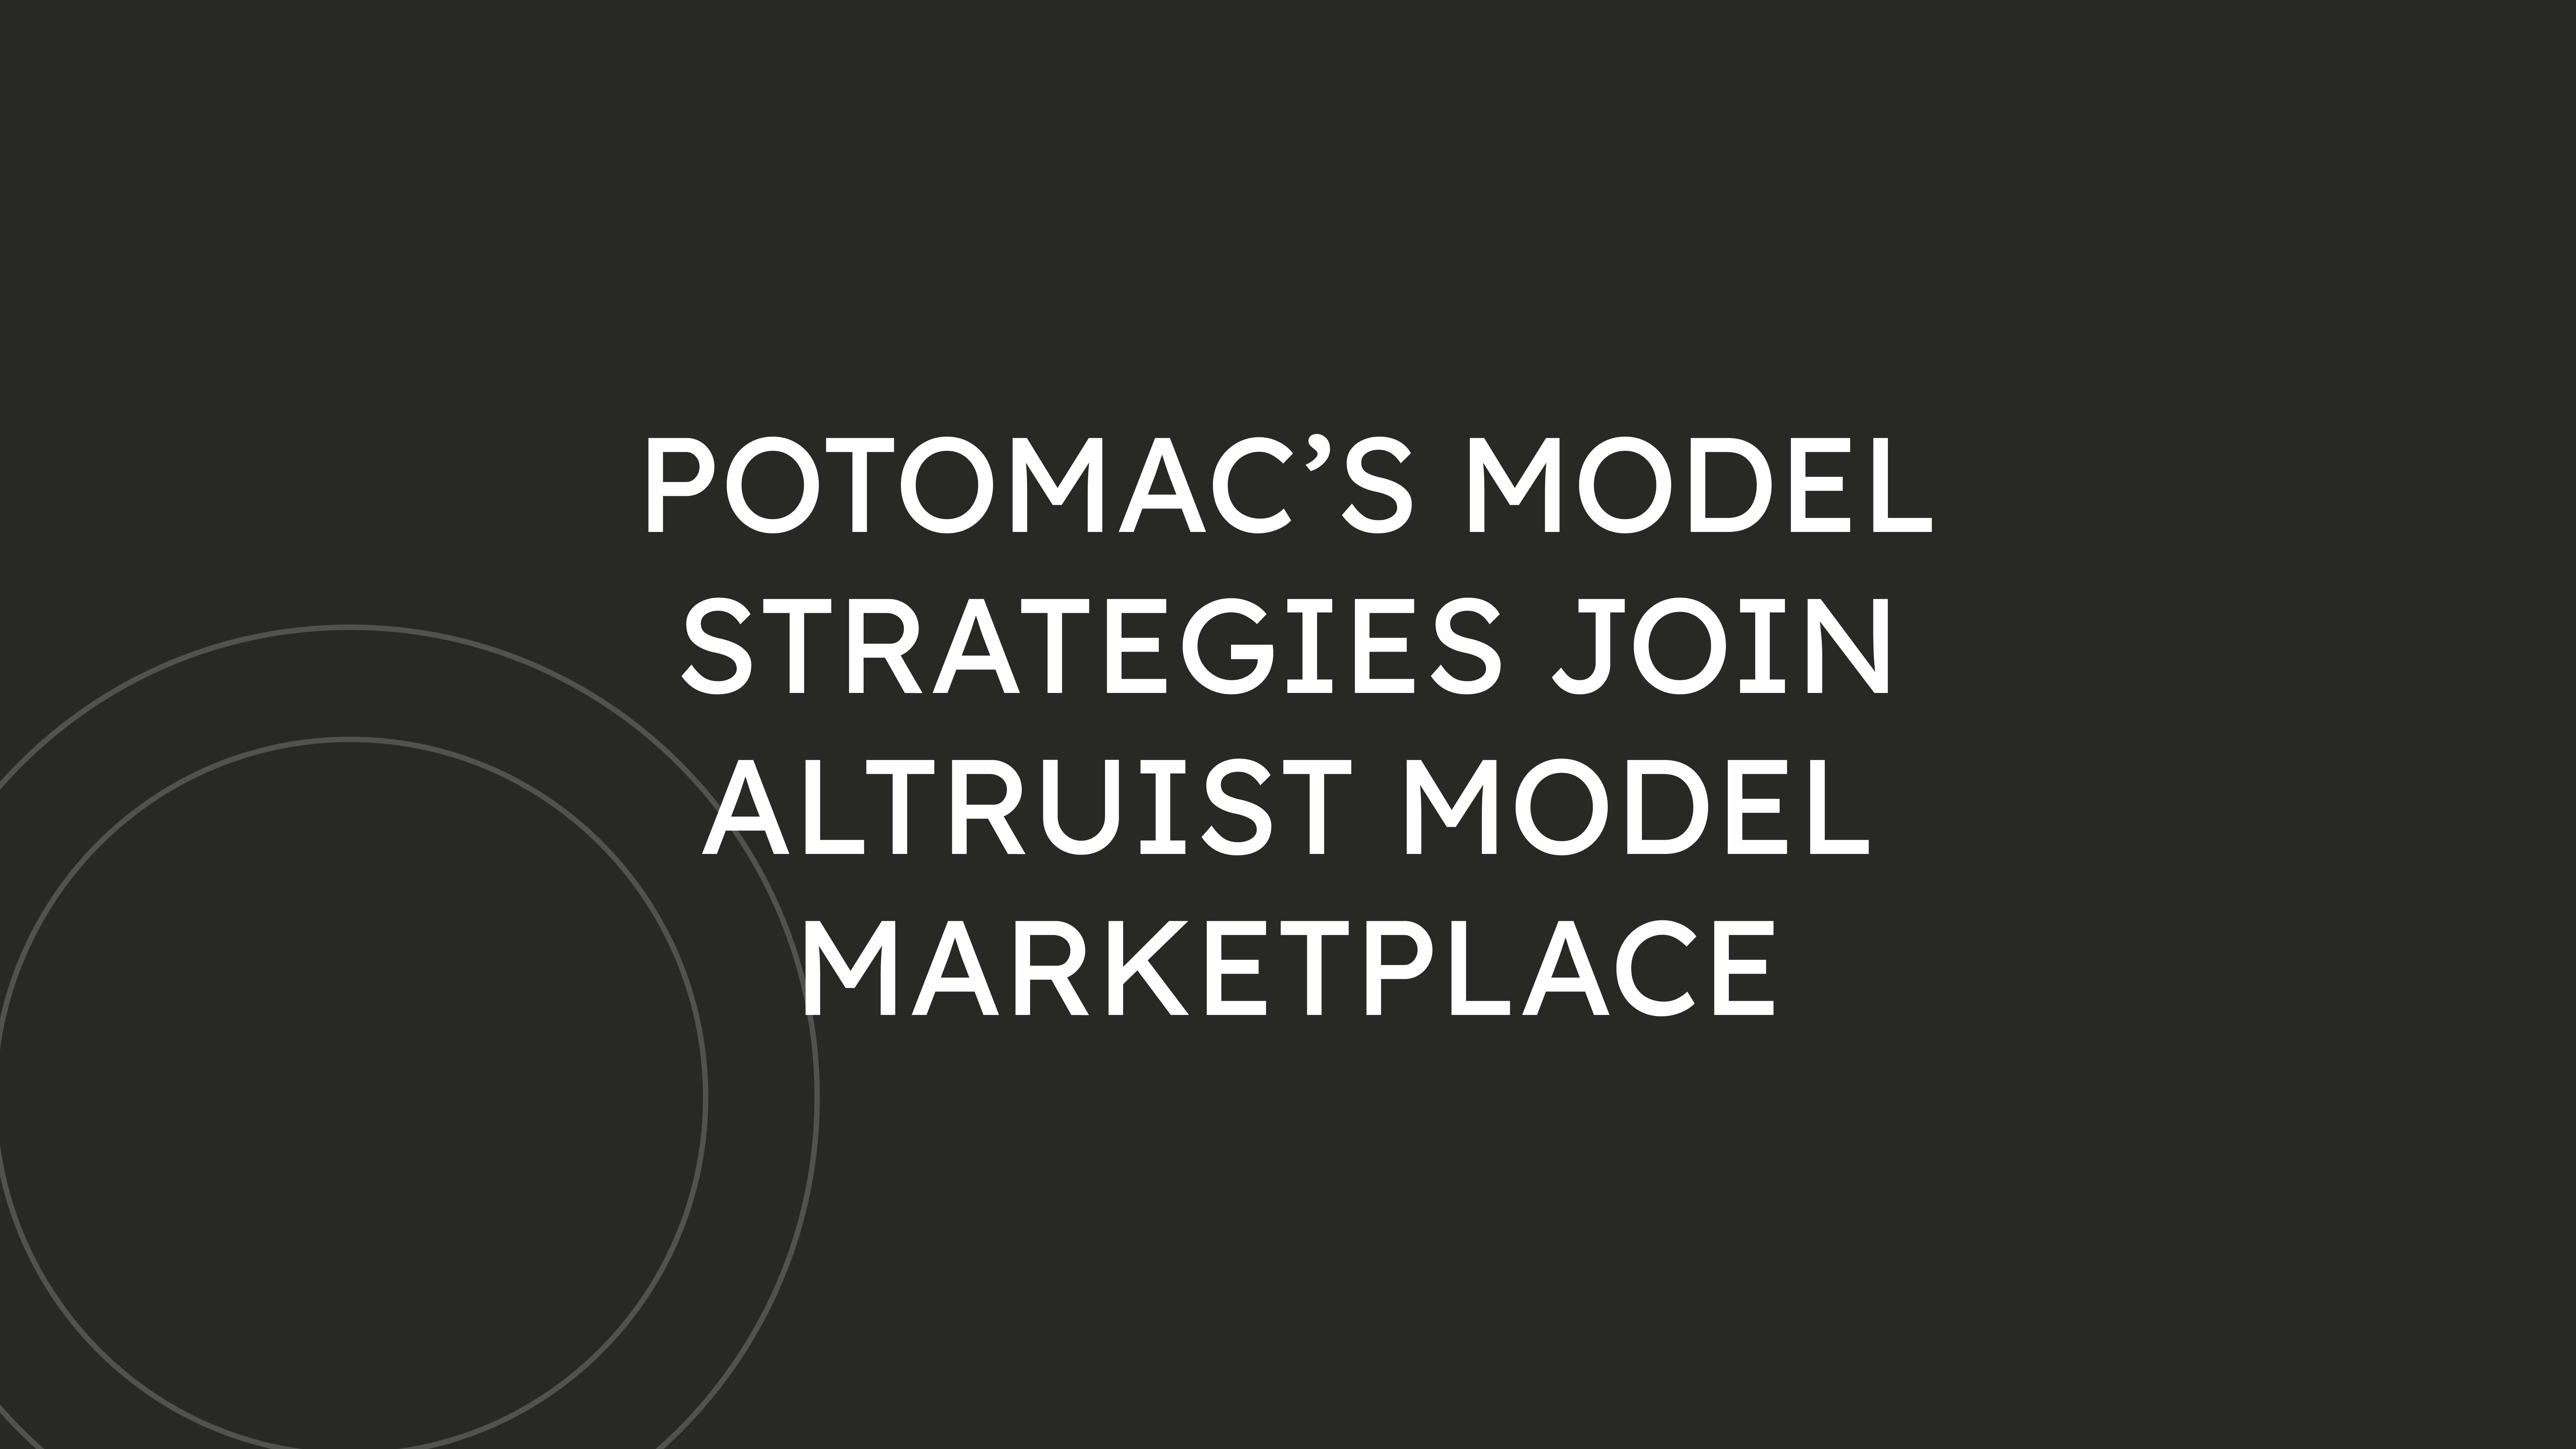 Potomac’s Model Strategies Join Altruist Model Marketplace